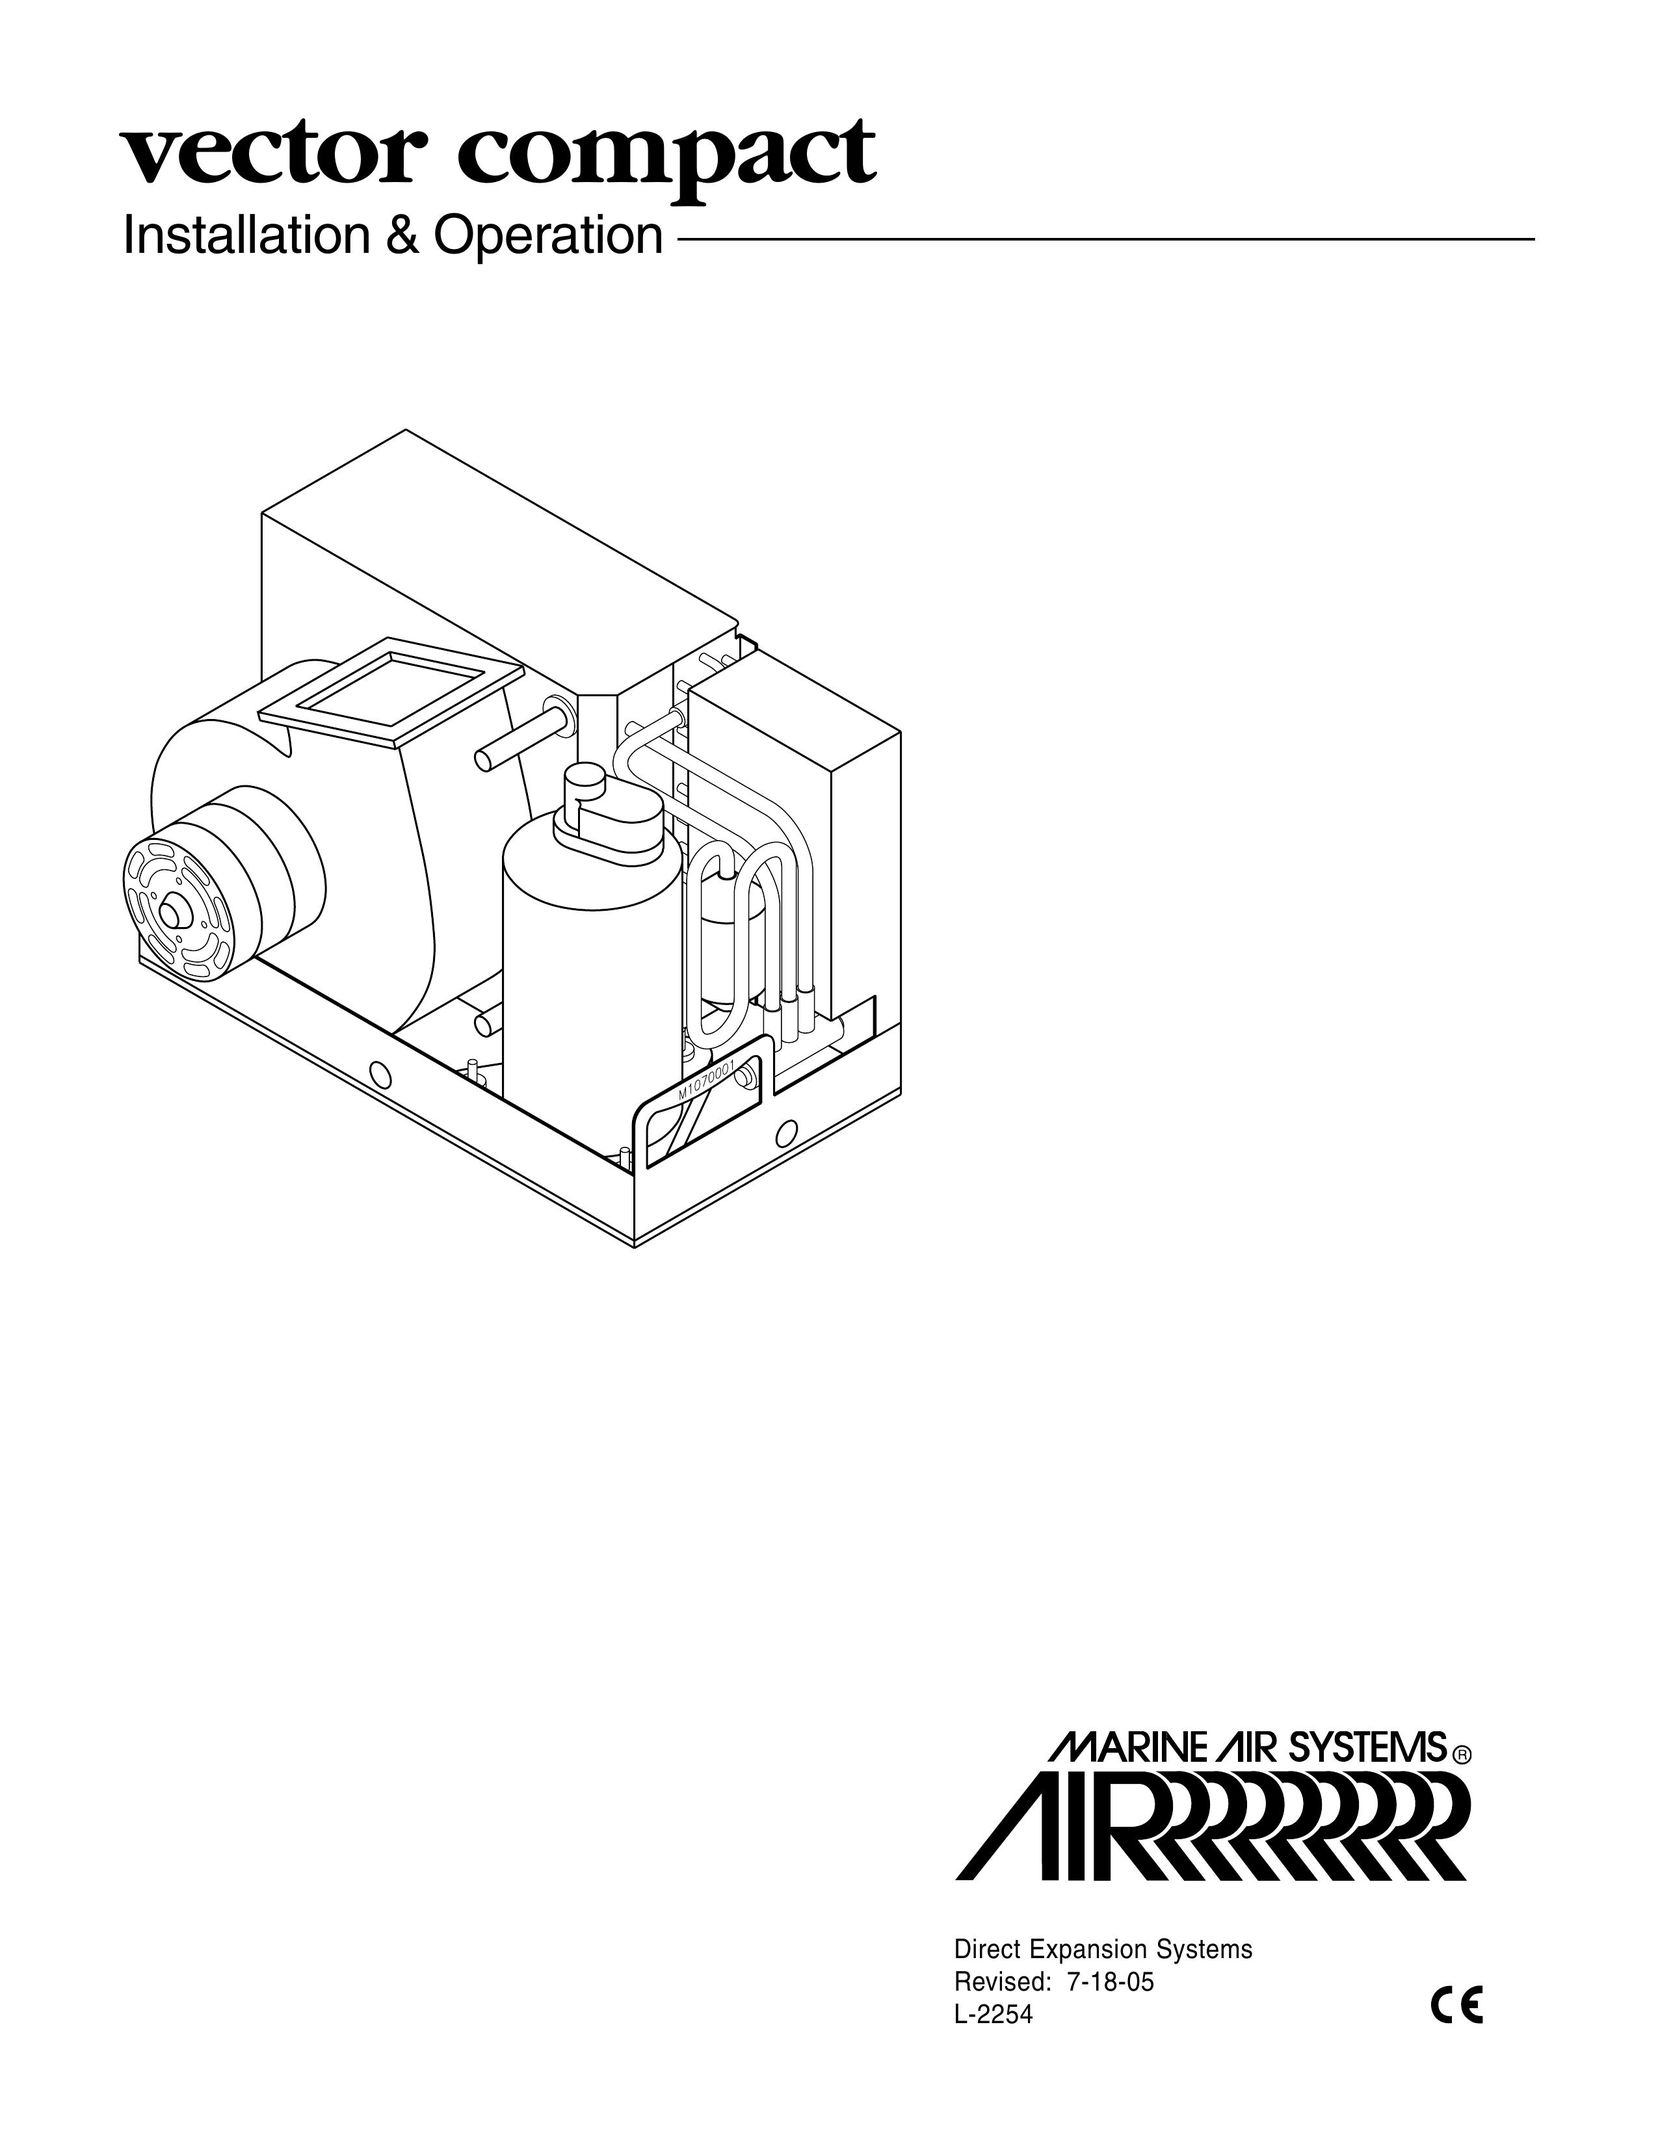 Mars Air Systems L-2254 Air Compressor User Manual